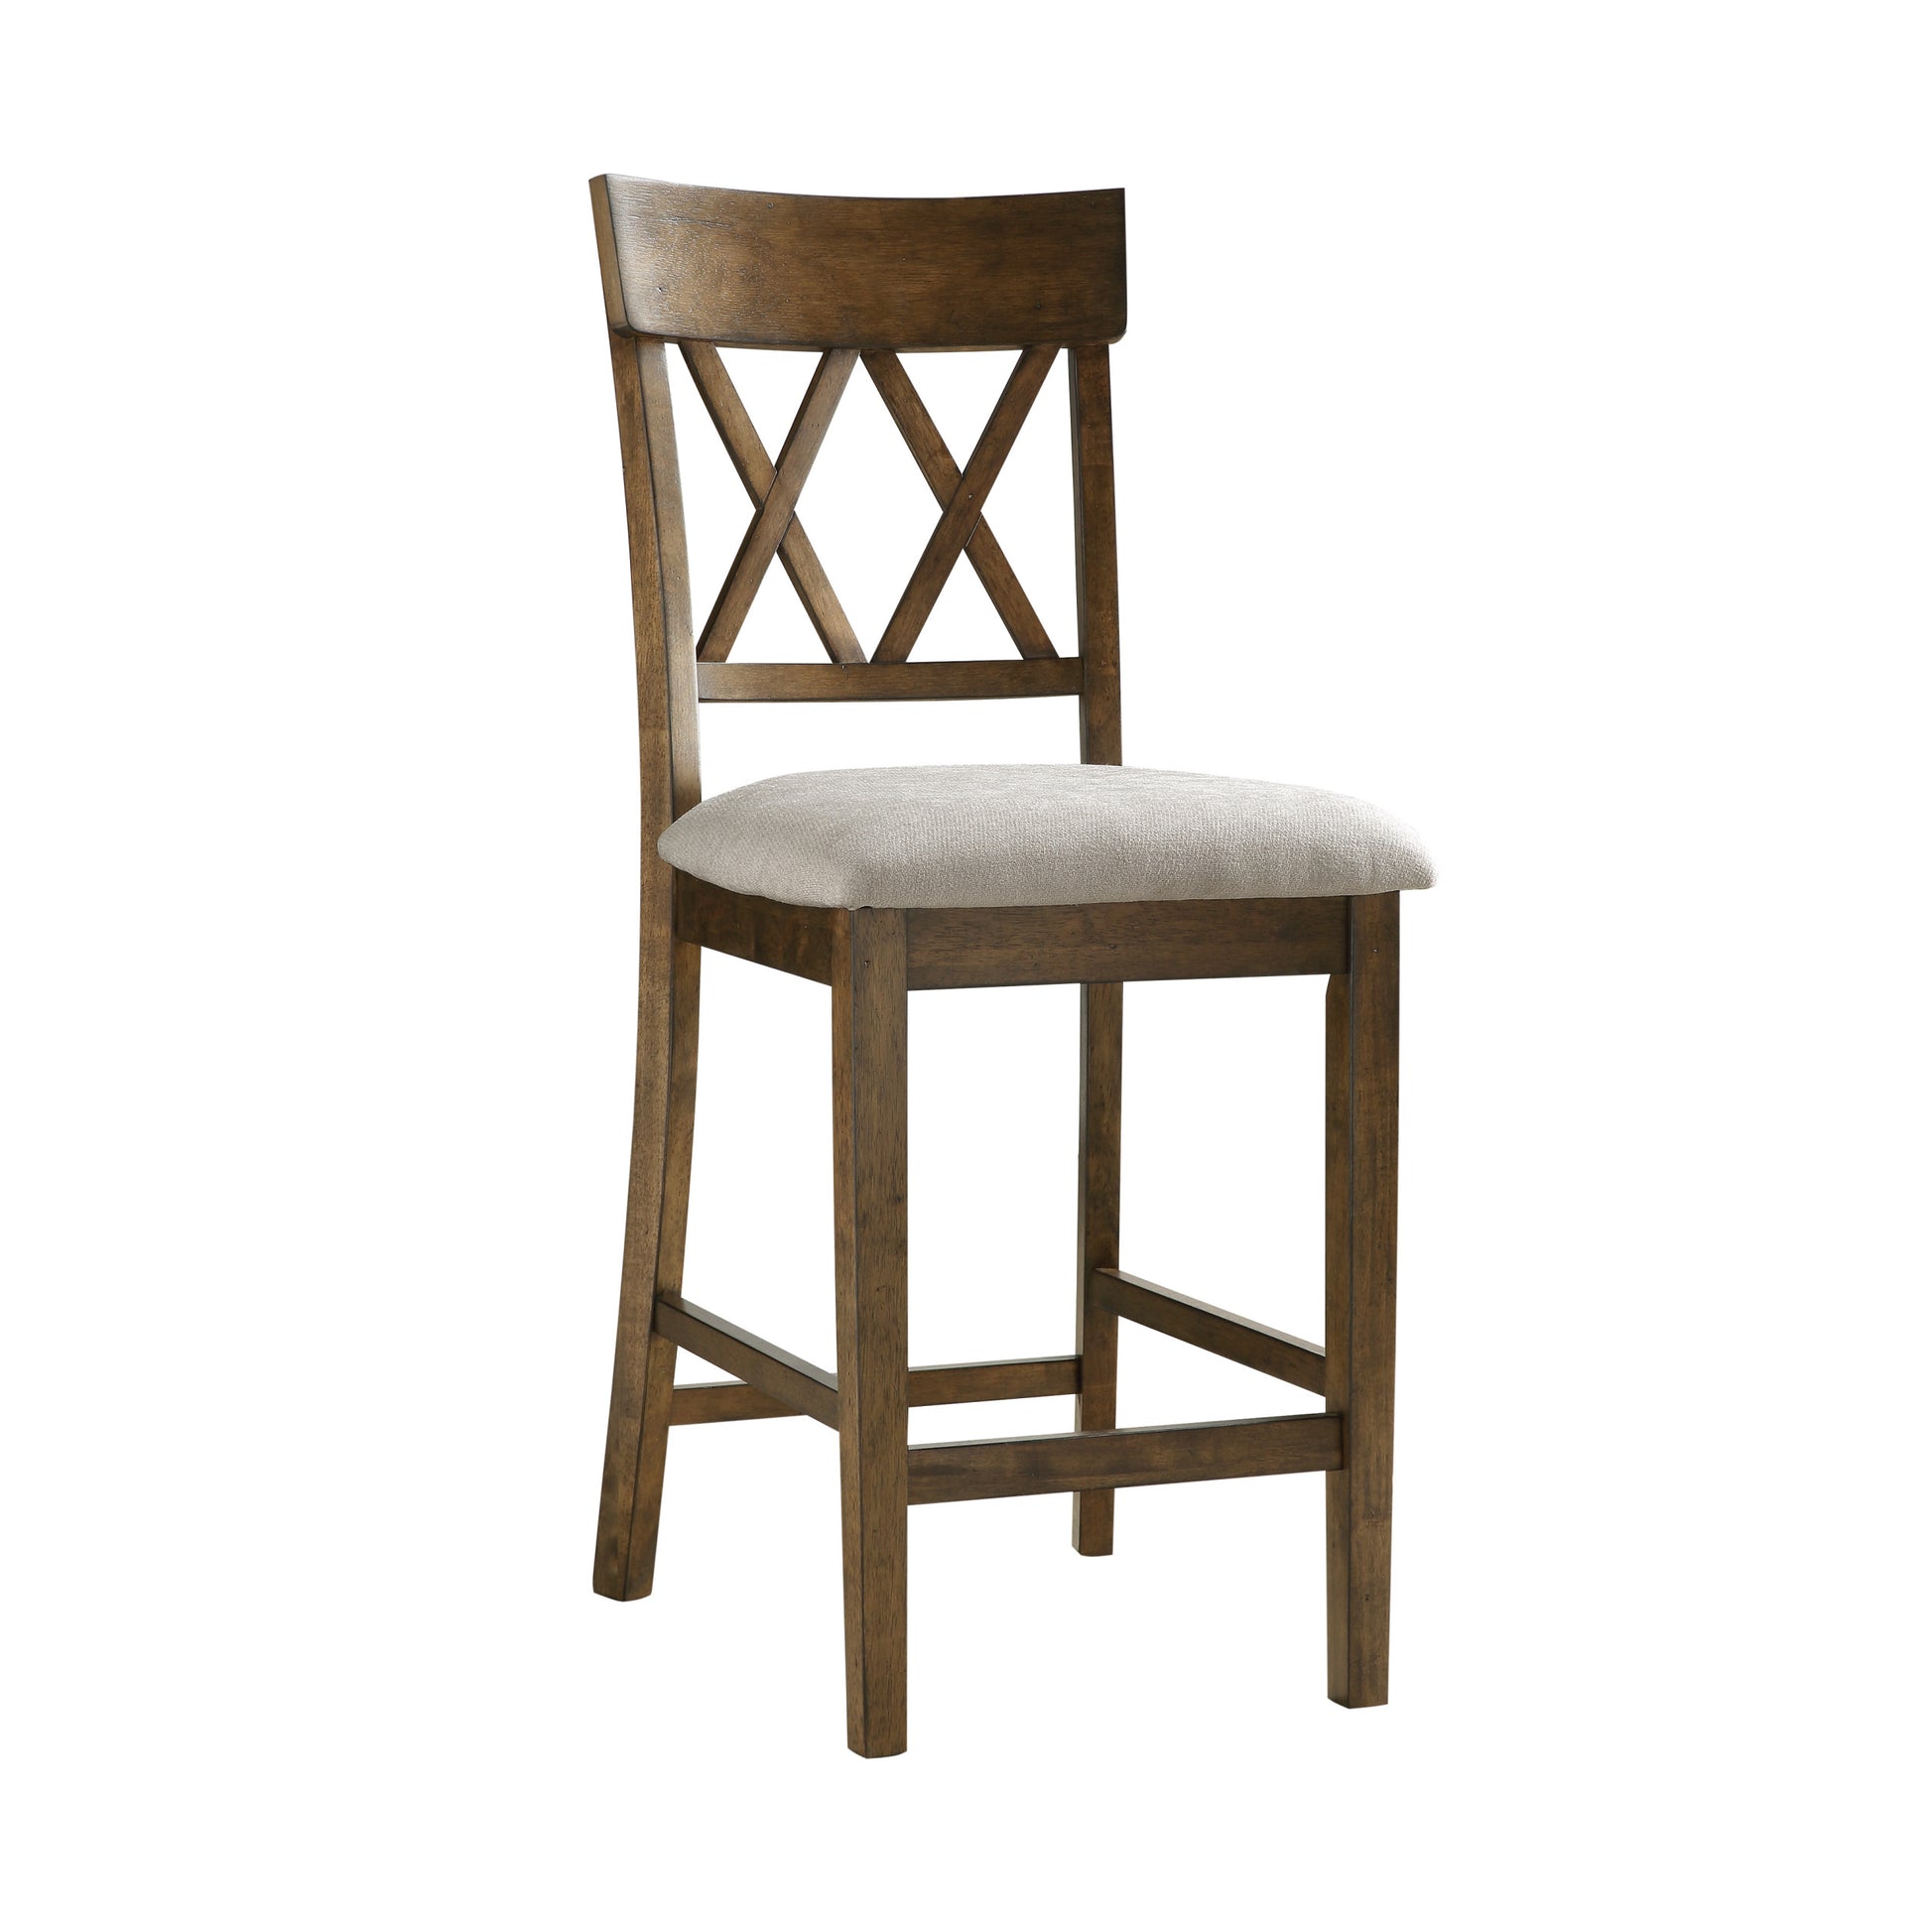 Light Oak Finish Counter Height Chairs Set of 2 Padded light oak-dining room-cross back-wood